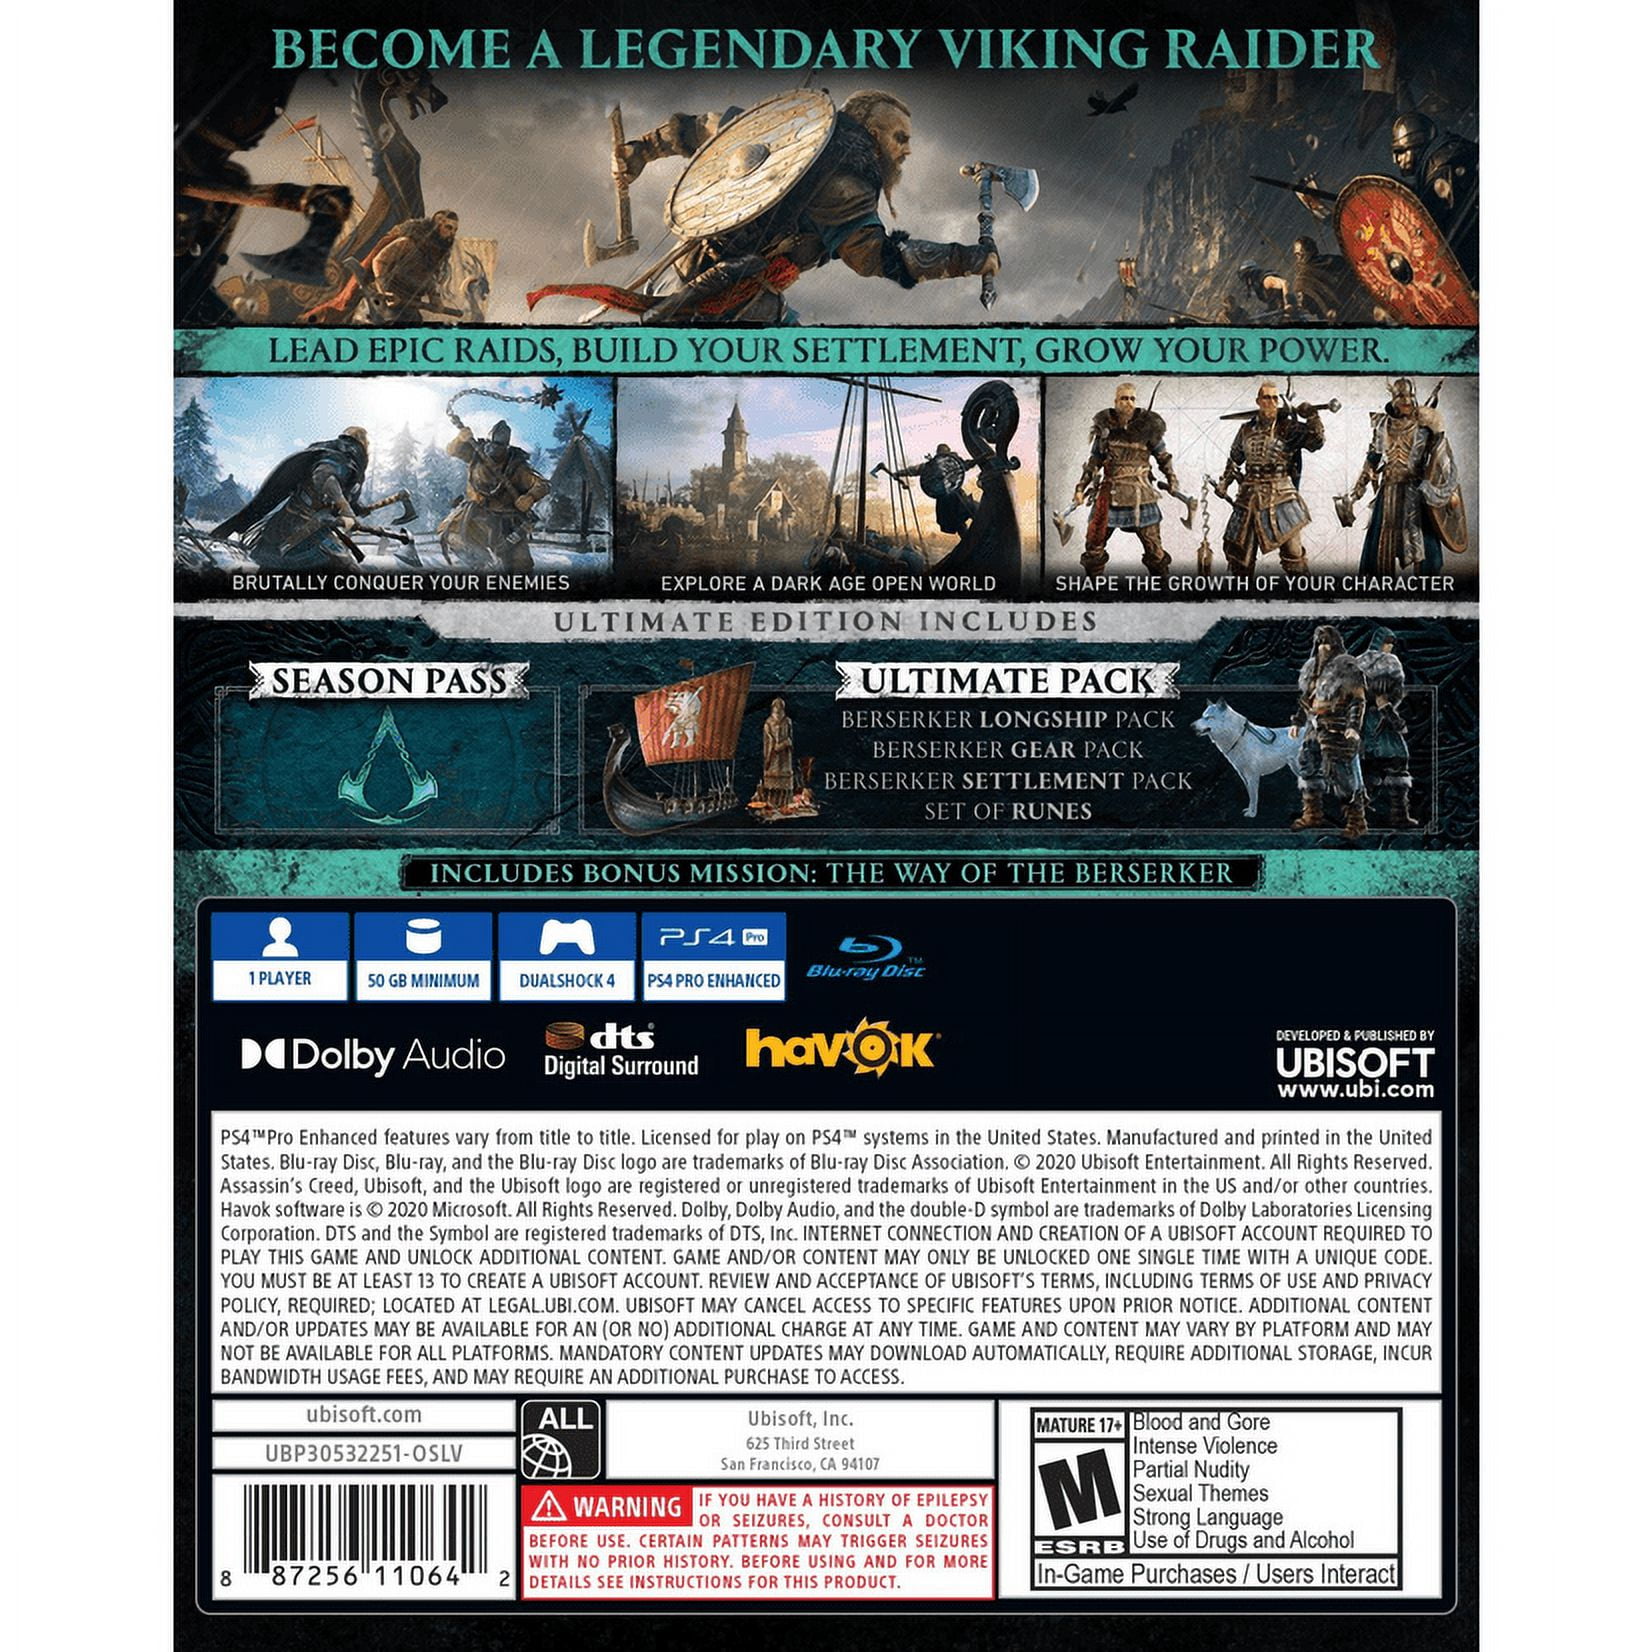 Review  Assassin's Creed Valhalla (PS4) - 8Bit/Digi